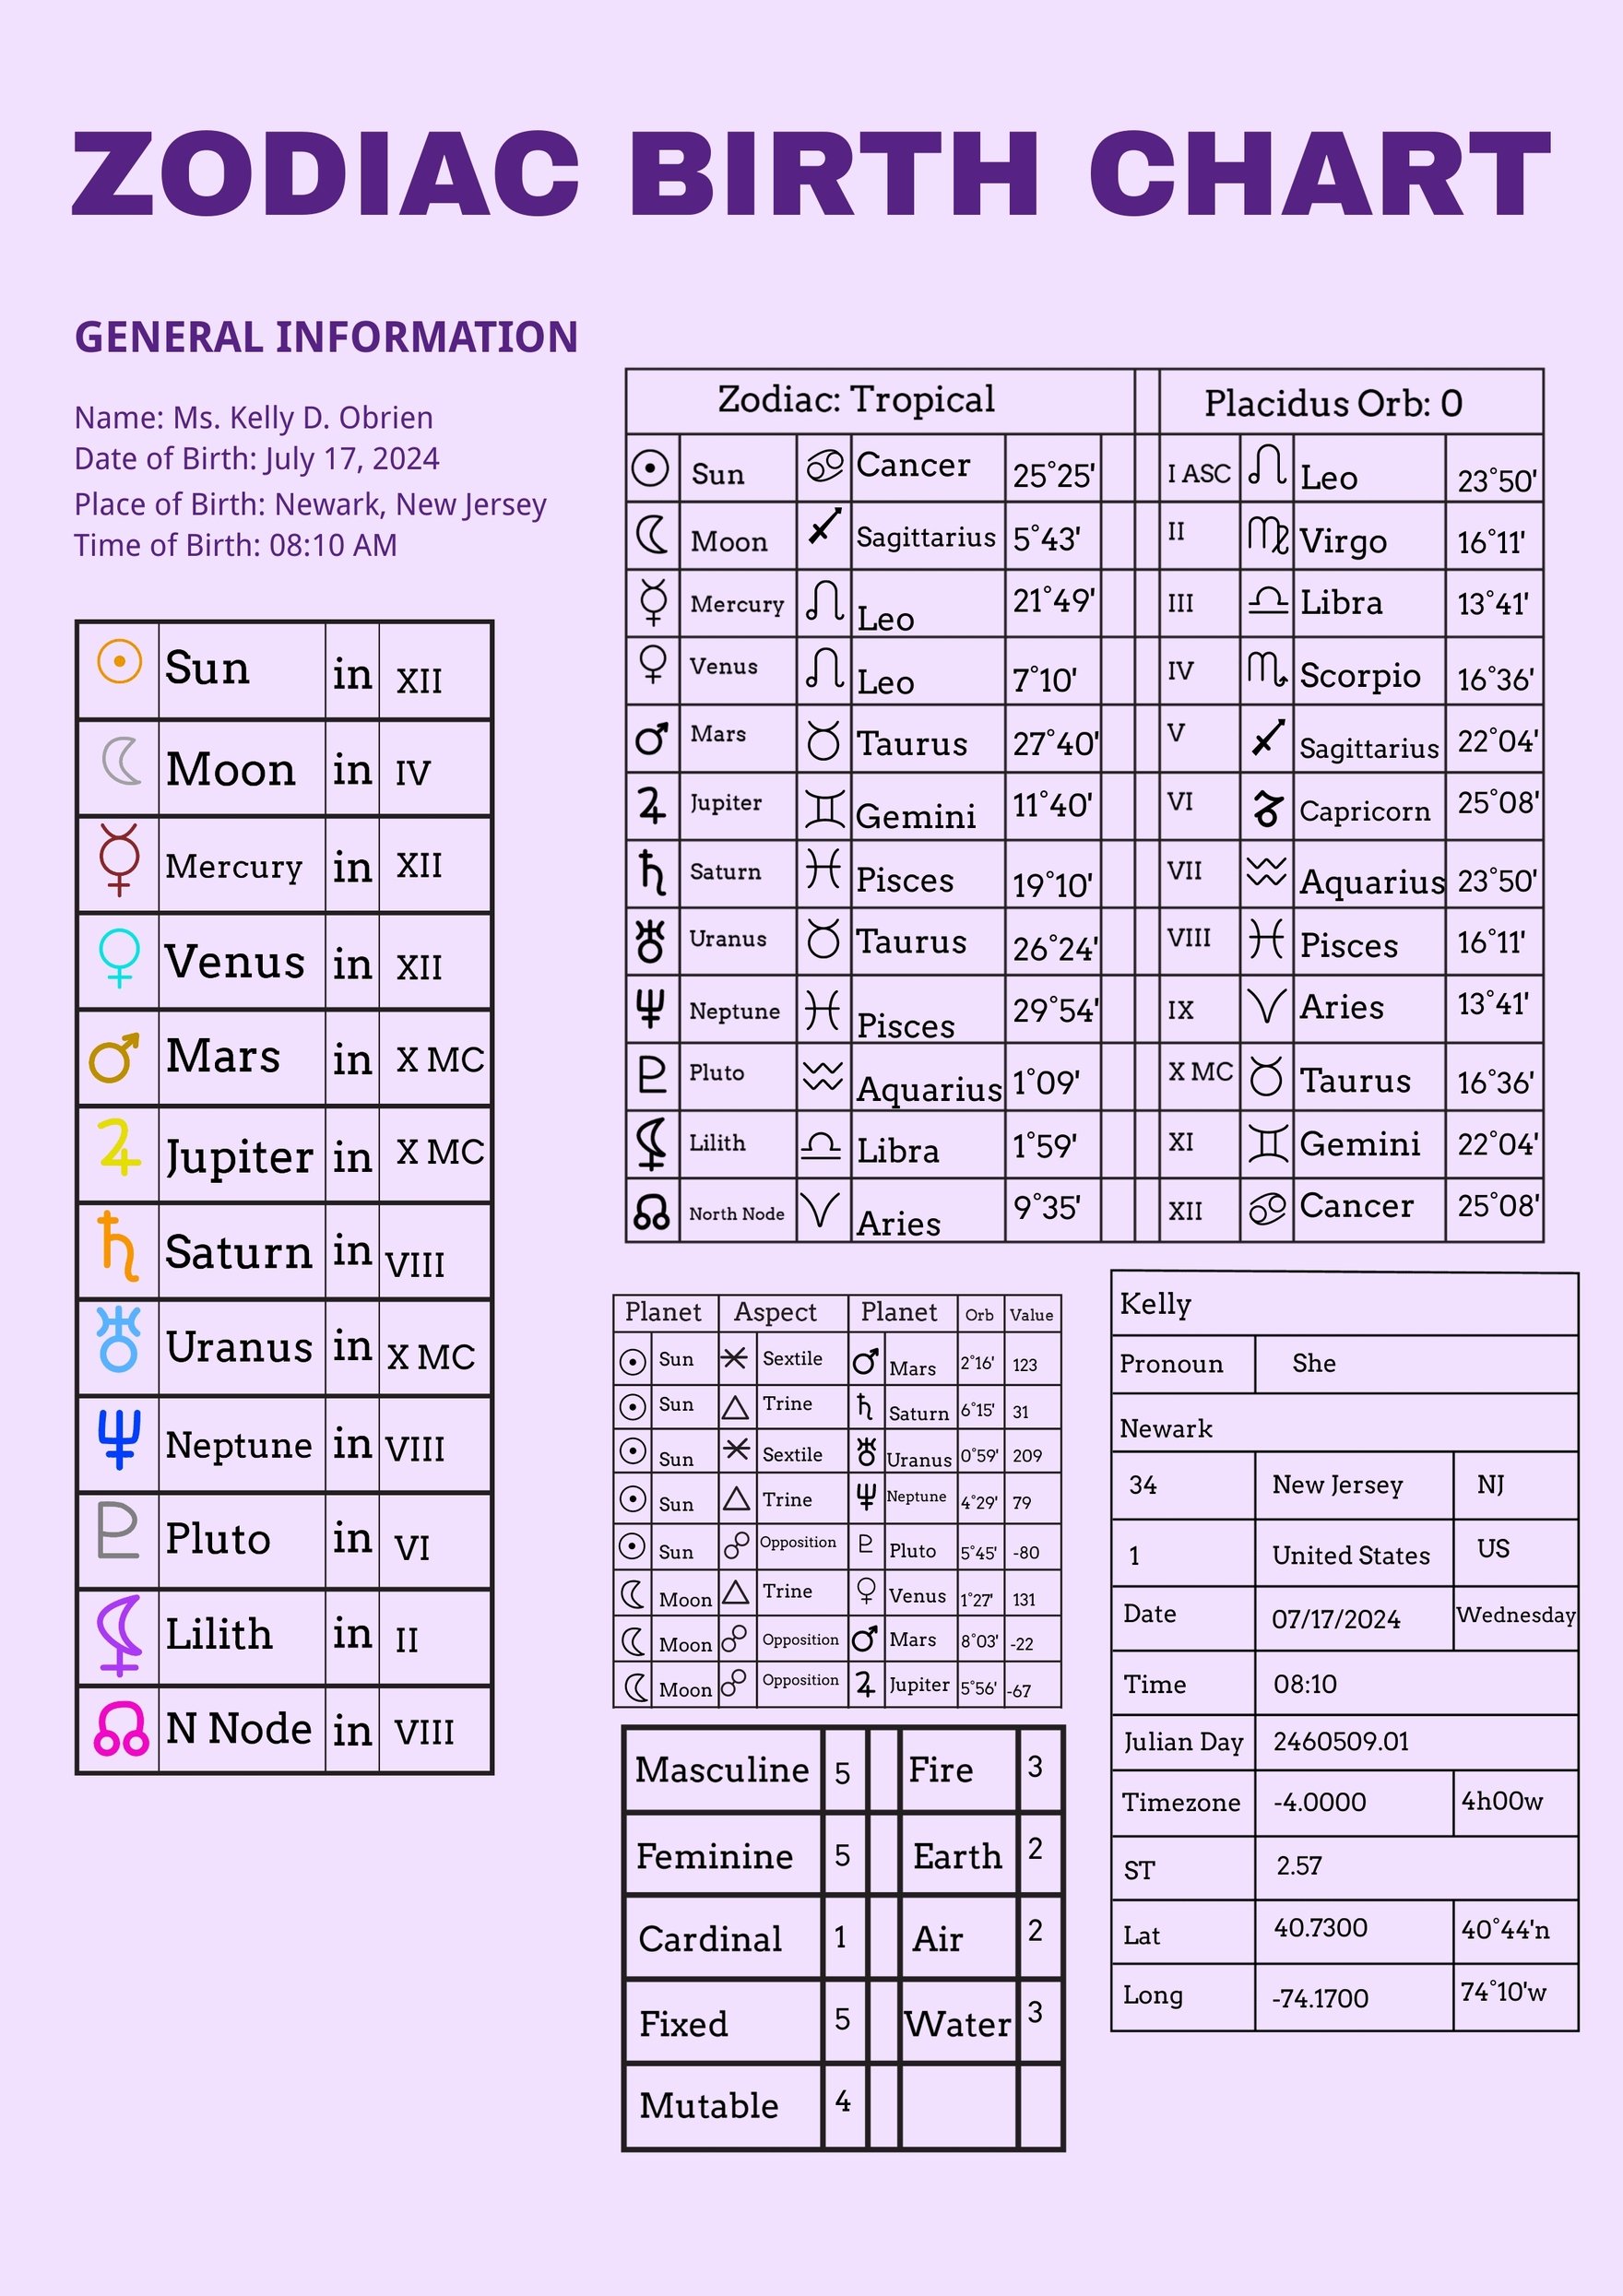 Zodiac Birth Chart Template in Illustrator, PDF - Download | Template.net